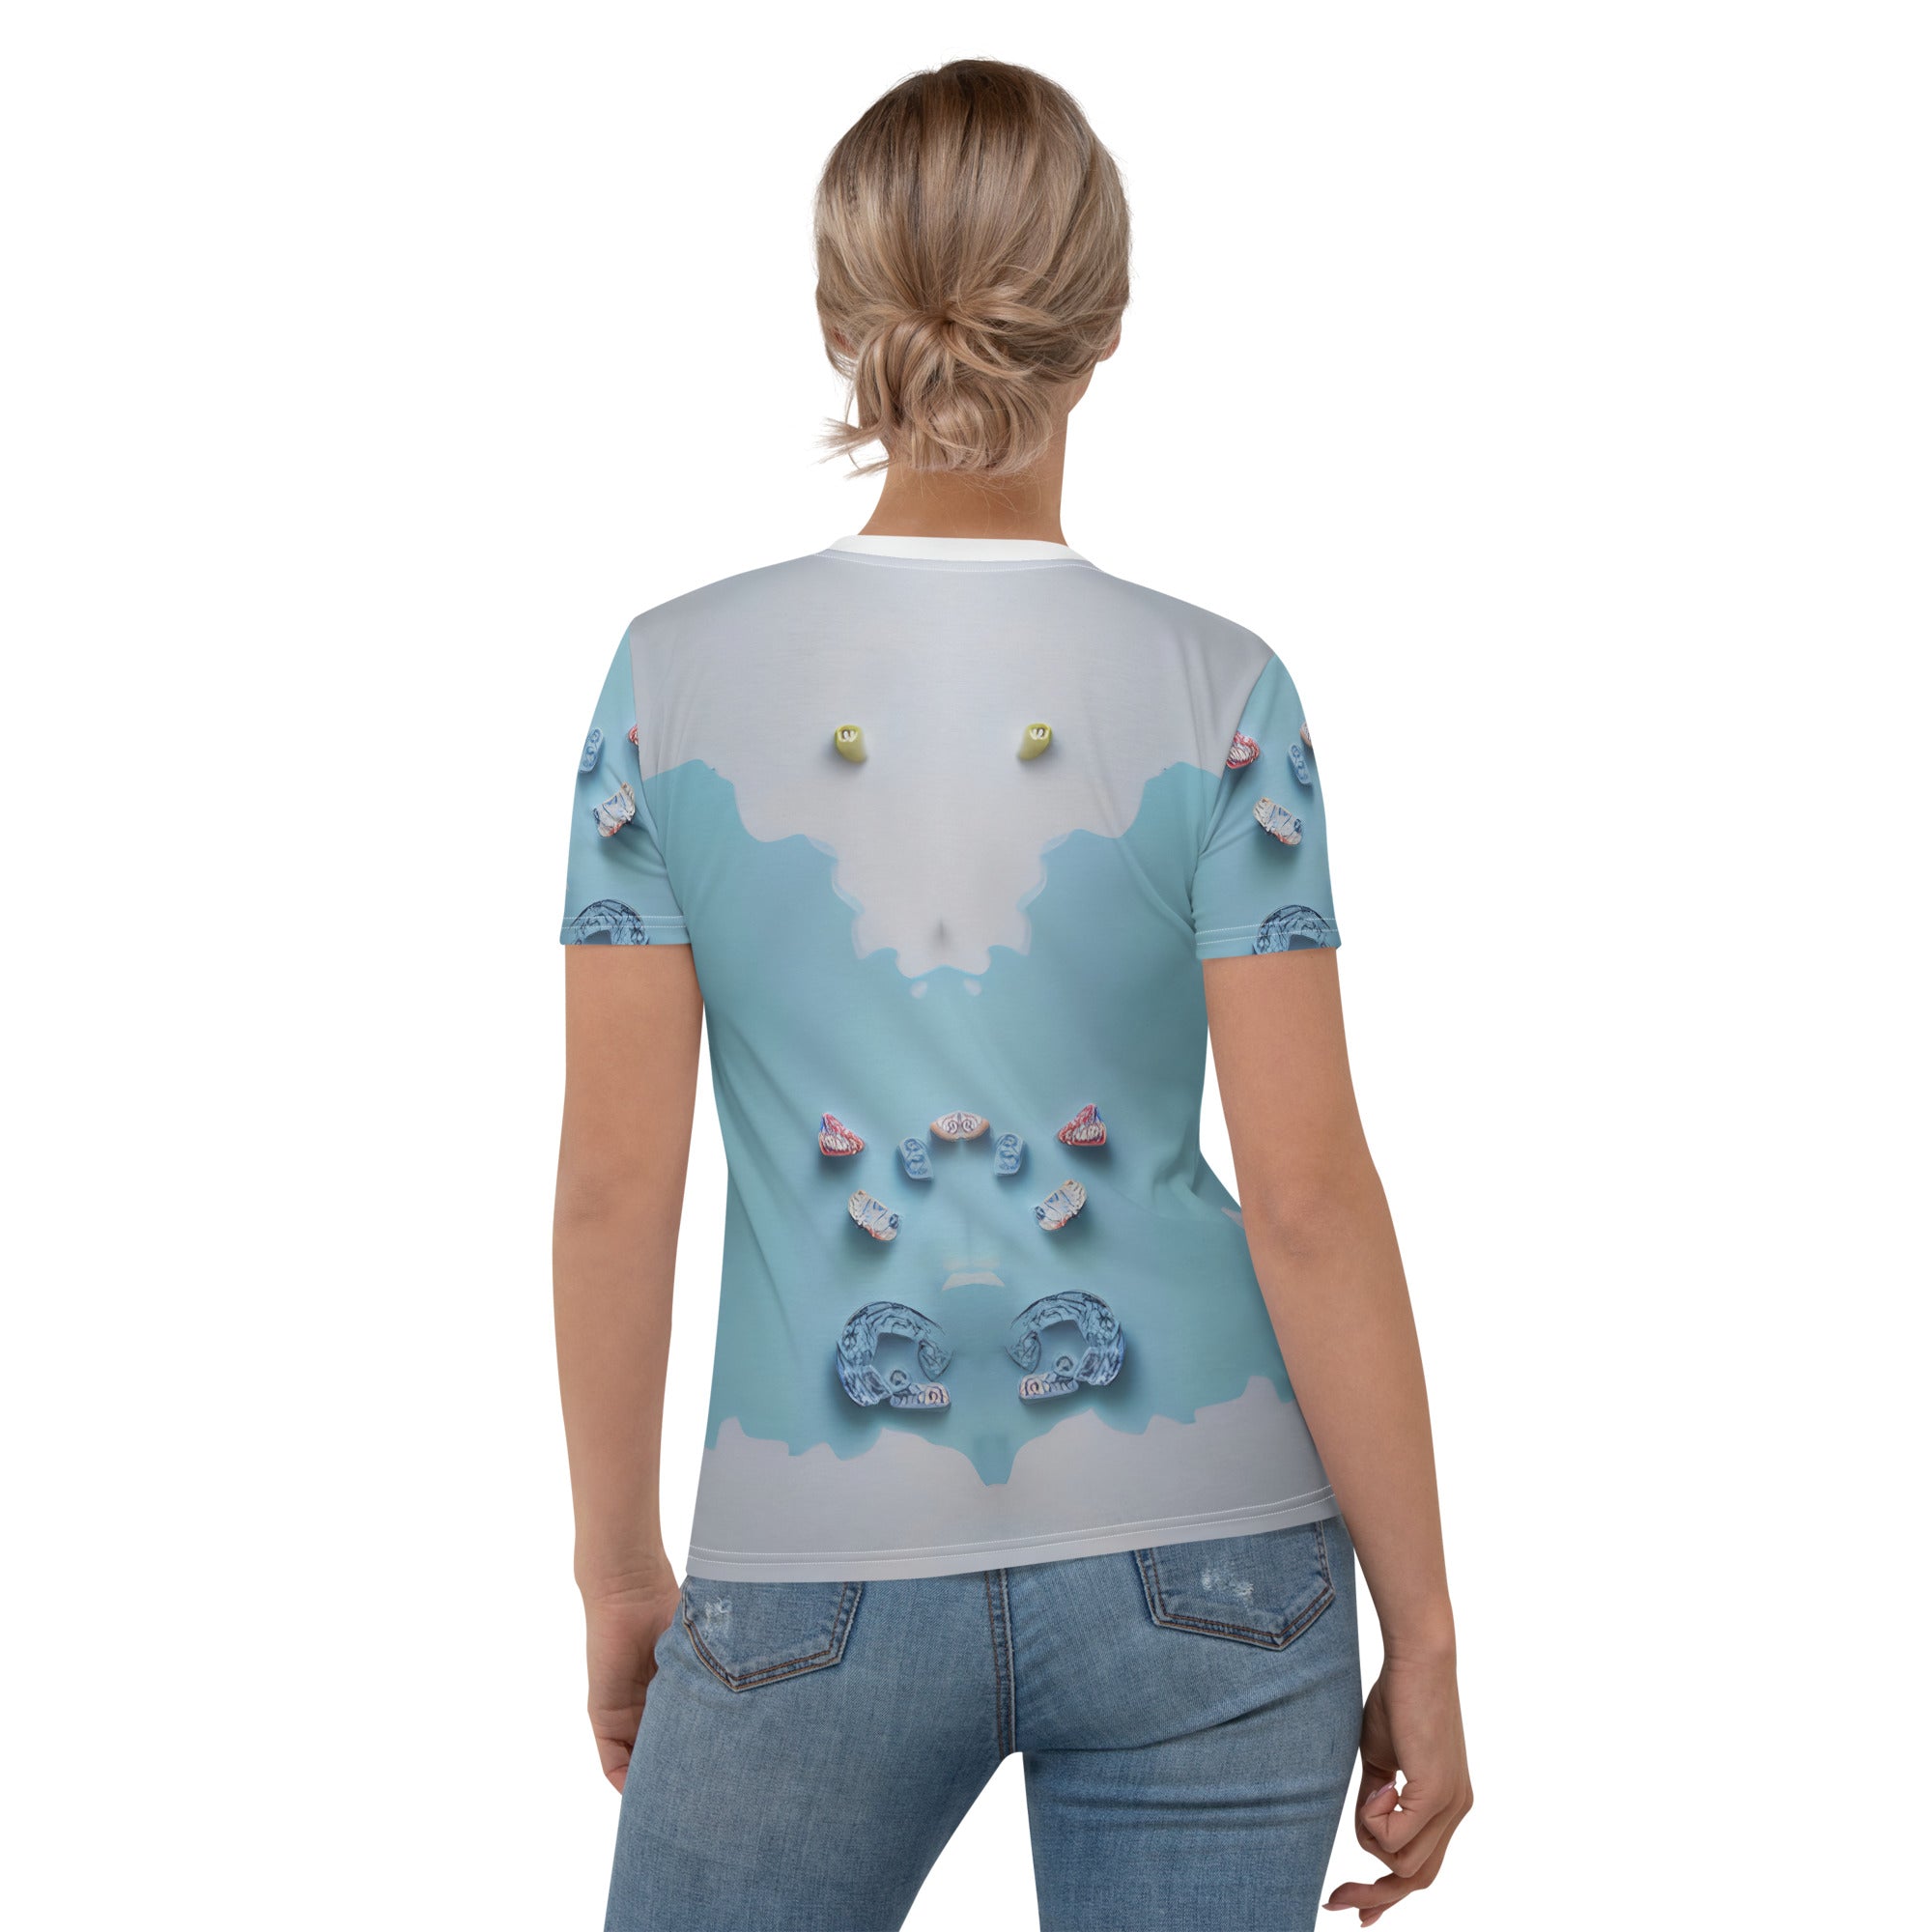 Stylish Women's Crew Neck T-Shirt featuring avian art.